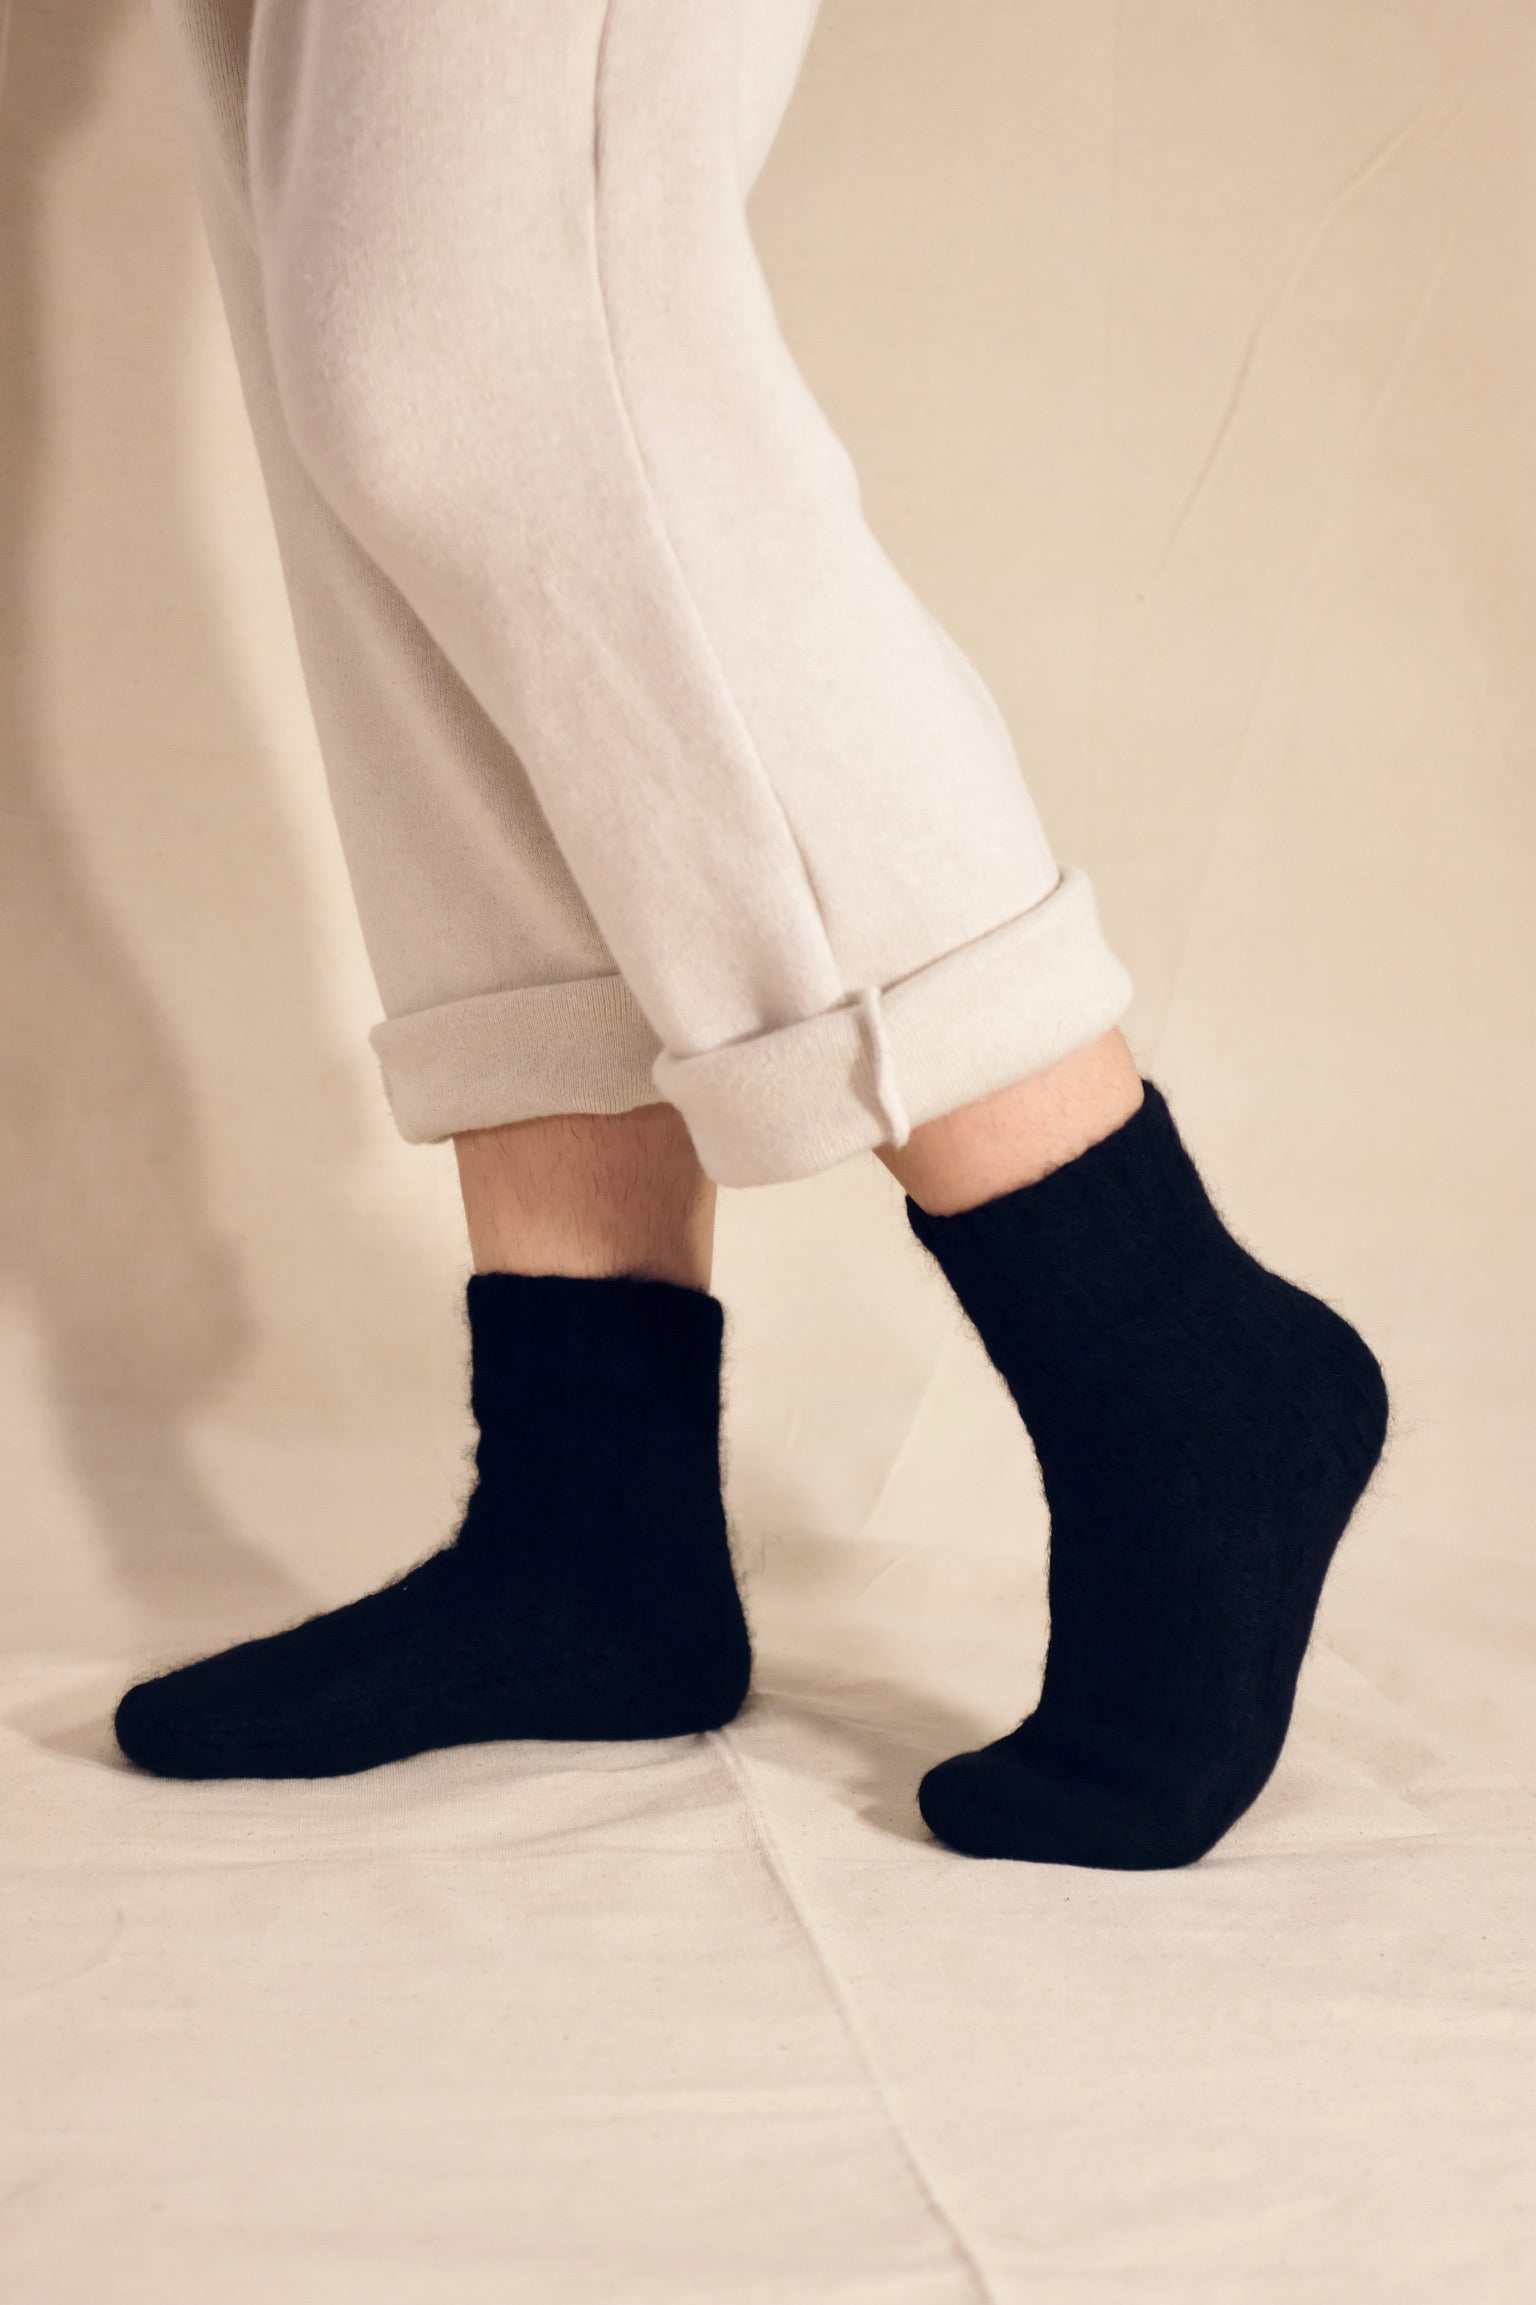 Bare Knitwear House Socks / Classic Black